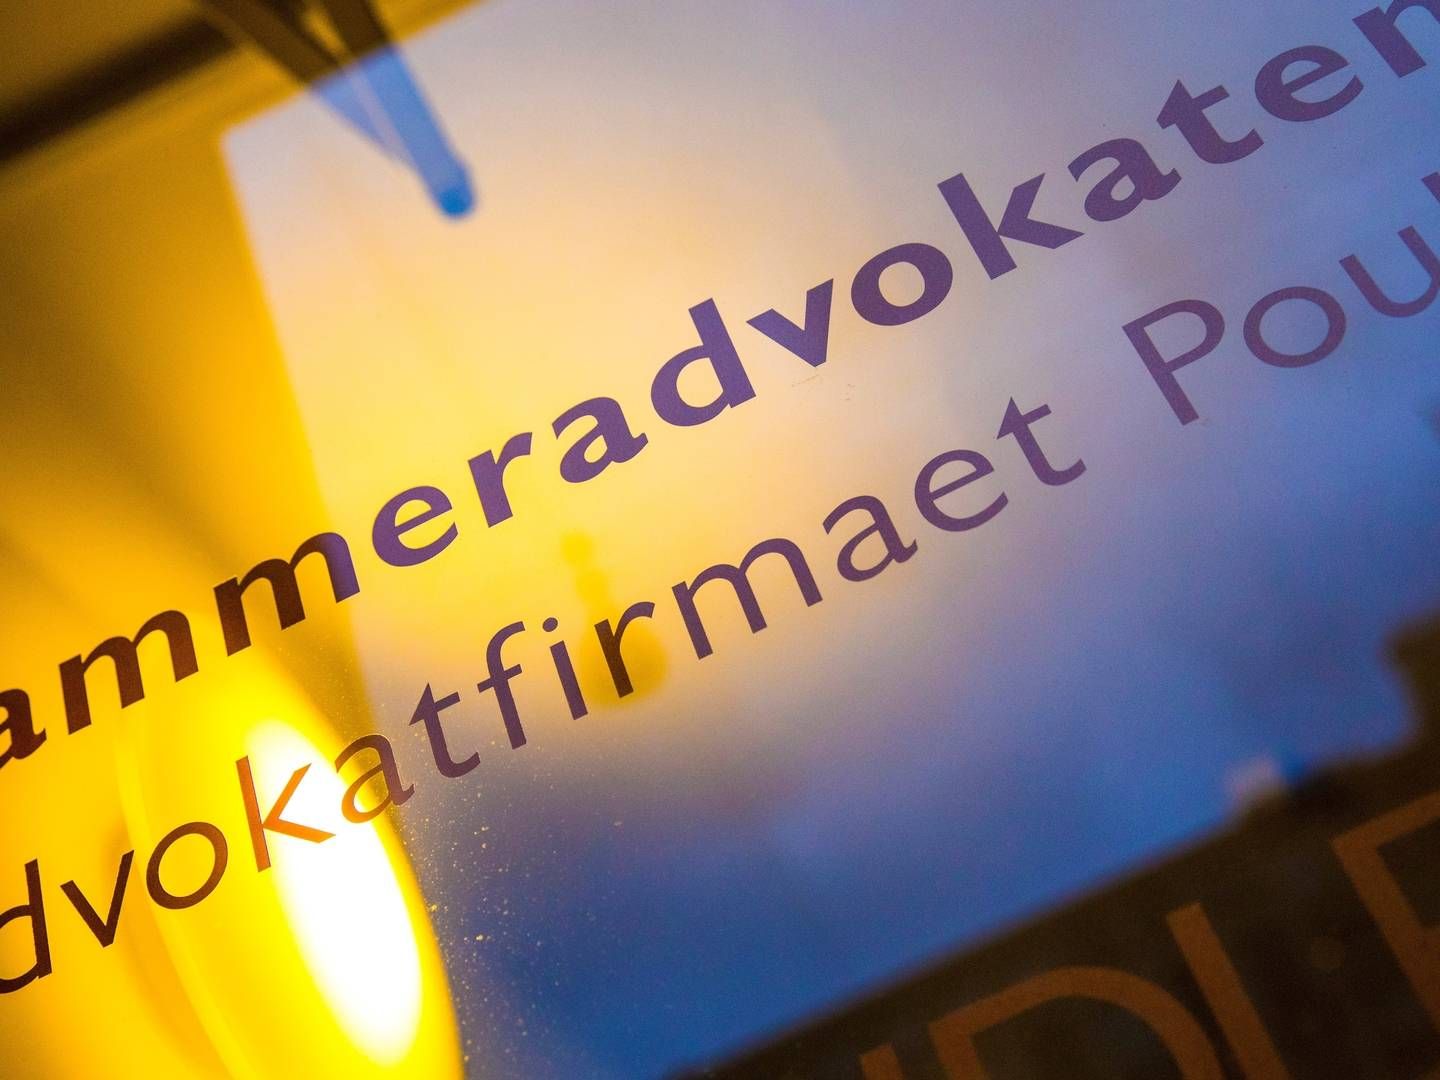 Kammeradvokaten får tre nye ejere. | Foto: Nikolai Linares